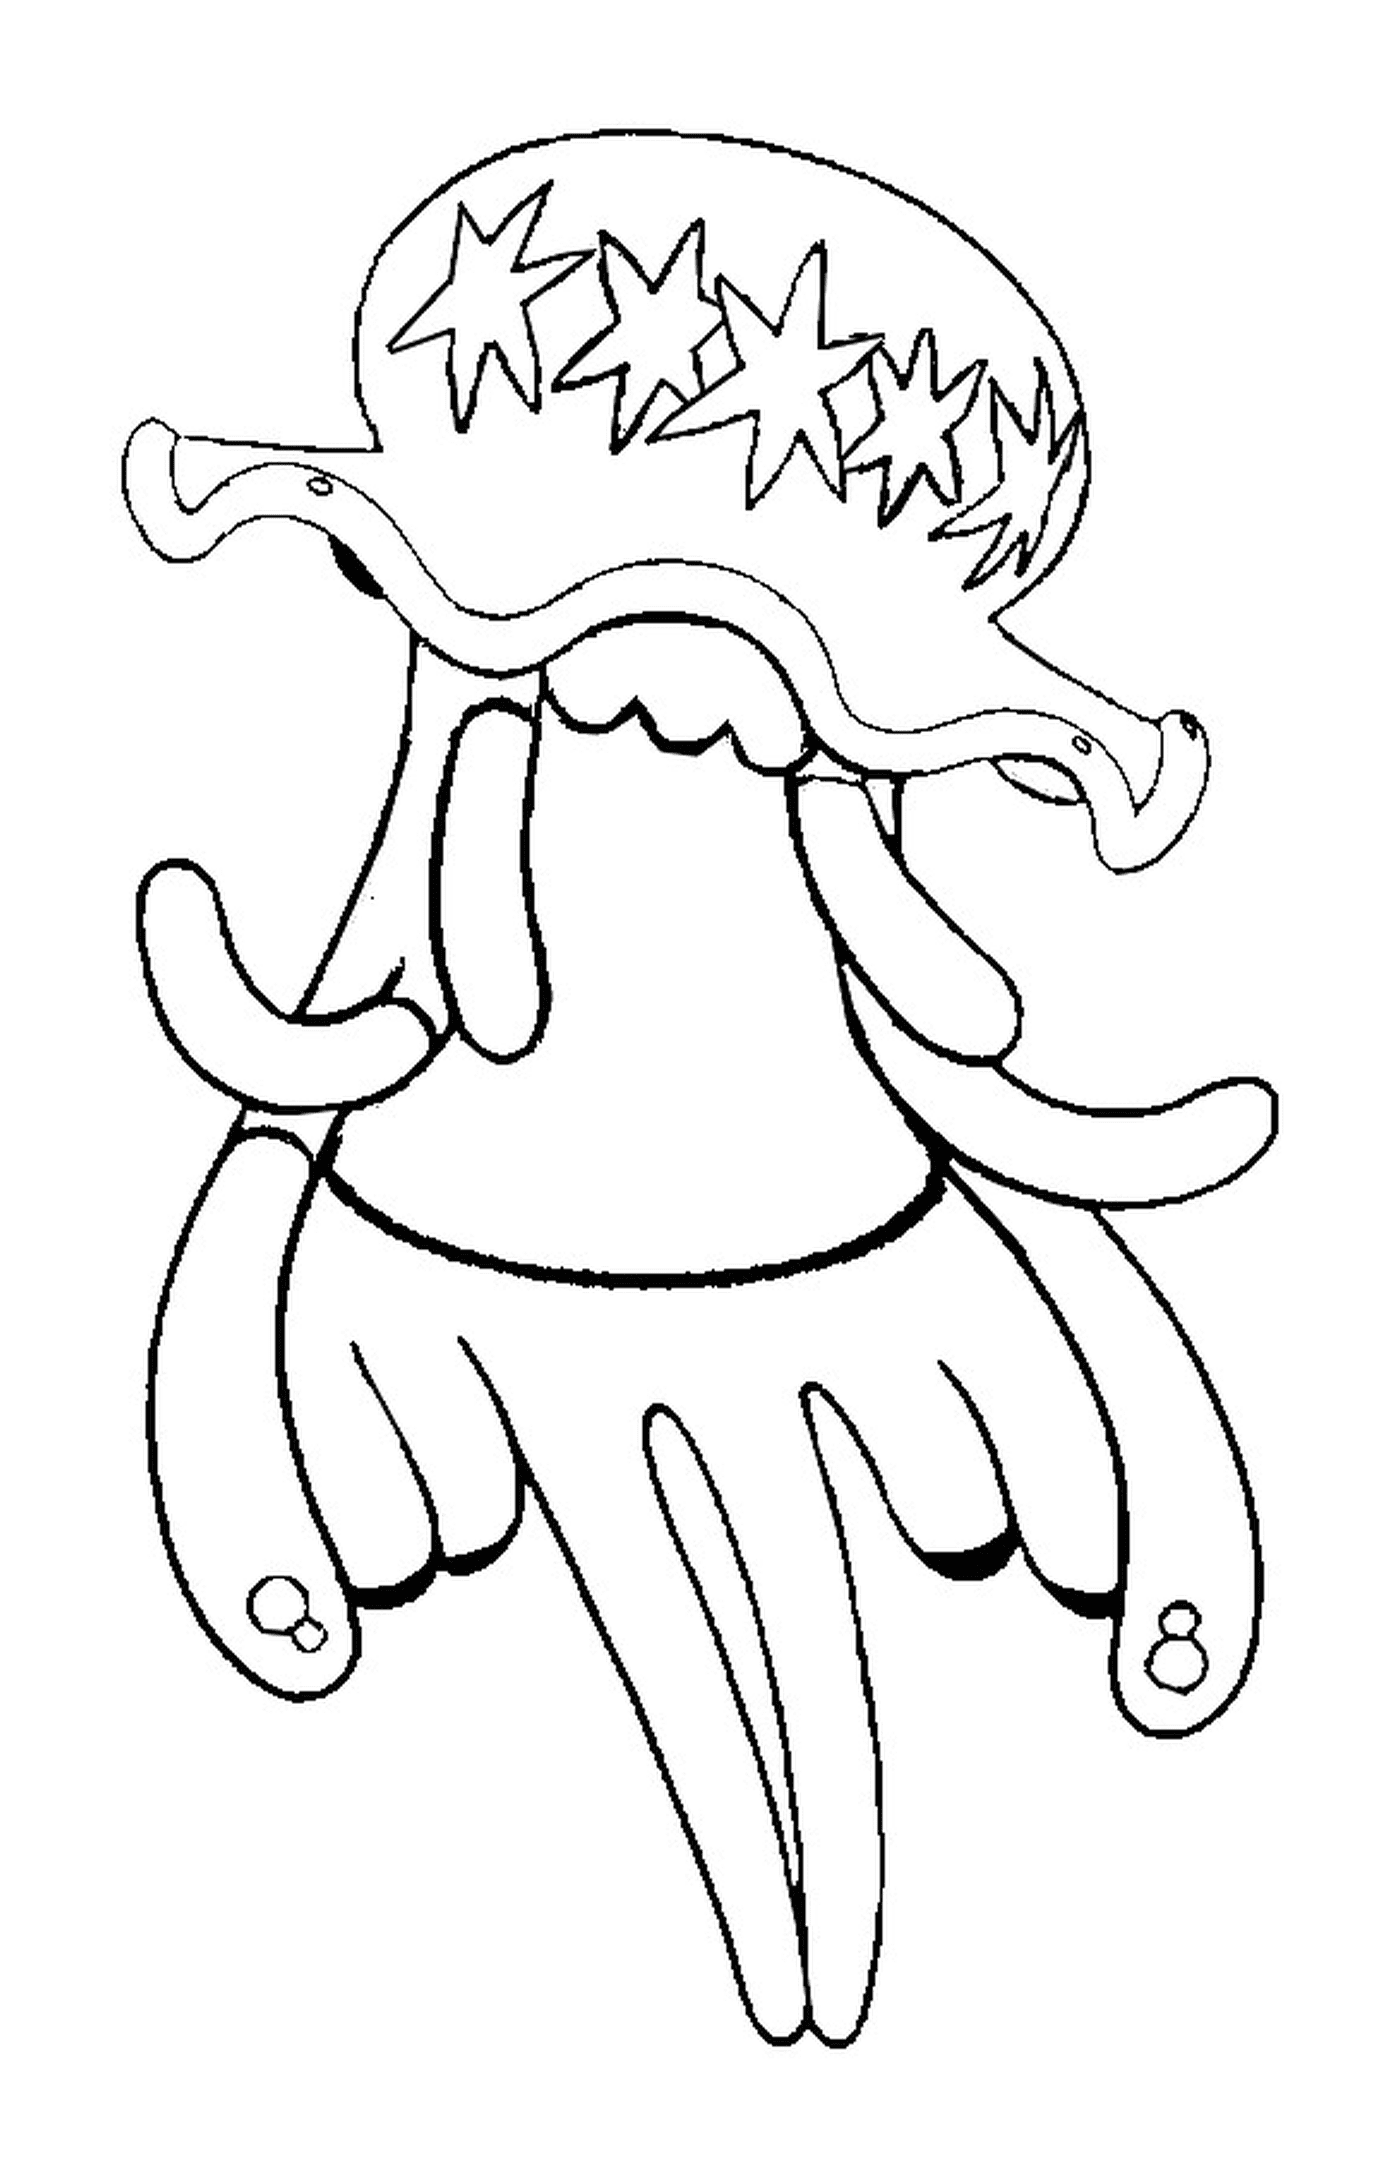  UB 01, a long tentacle octopus 